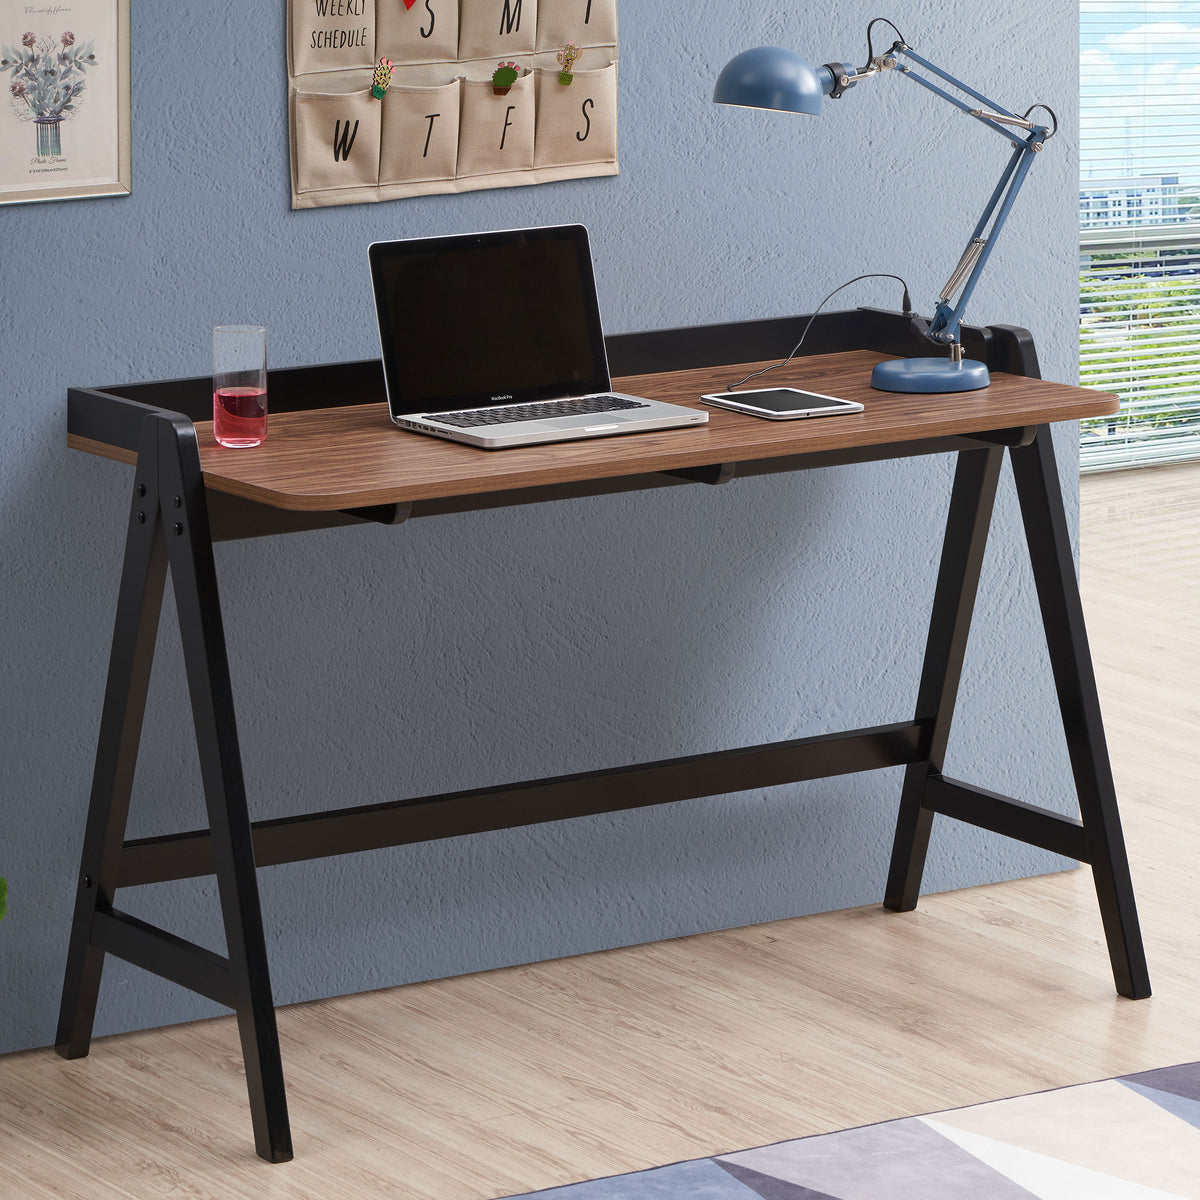 Raul Writing Desk Walnut and Black with USB ports  Half Price Furniture